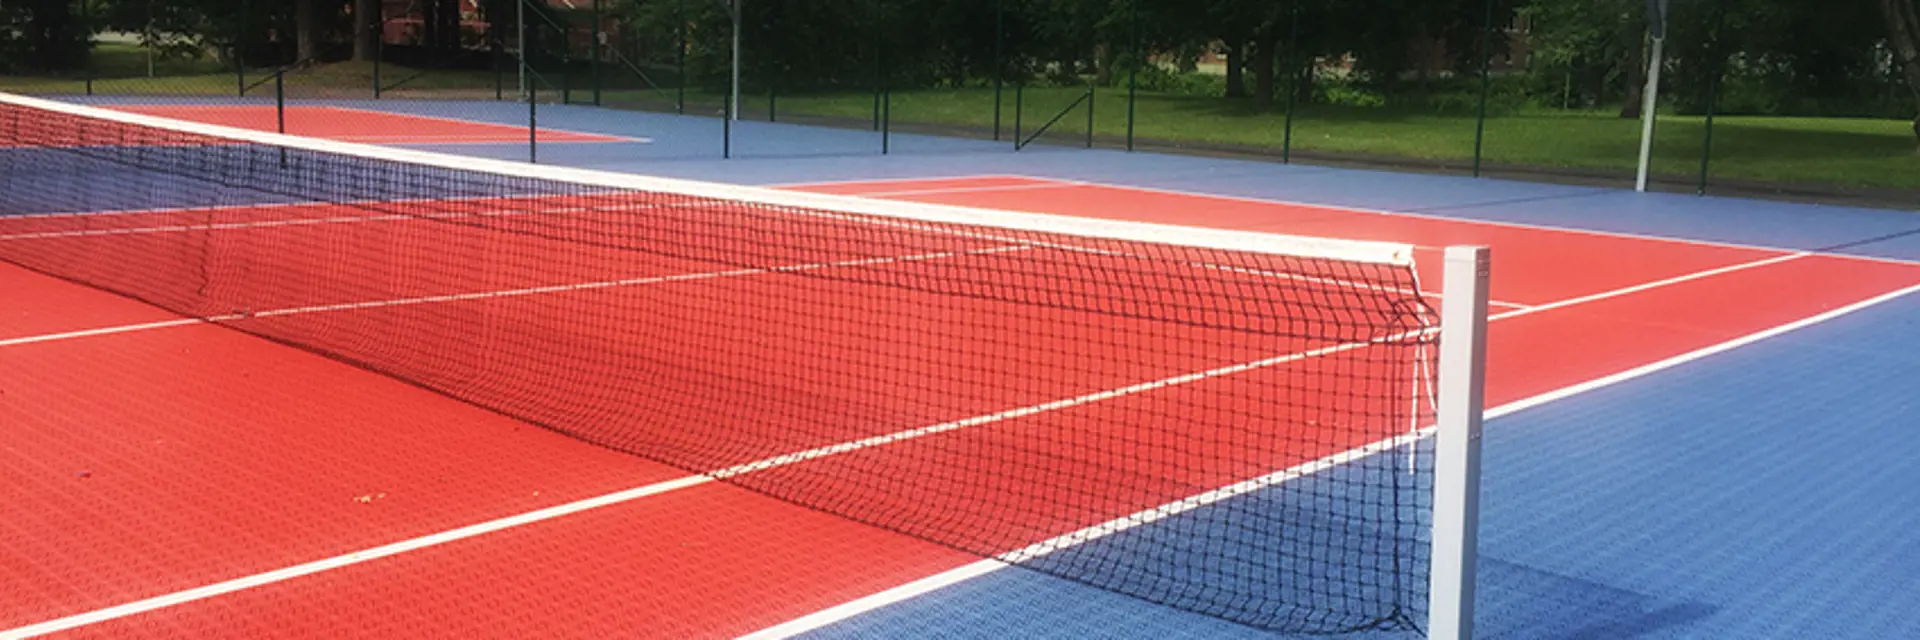 Bergo Flooring Tenniscourt (13)